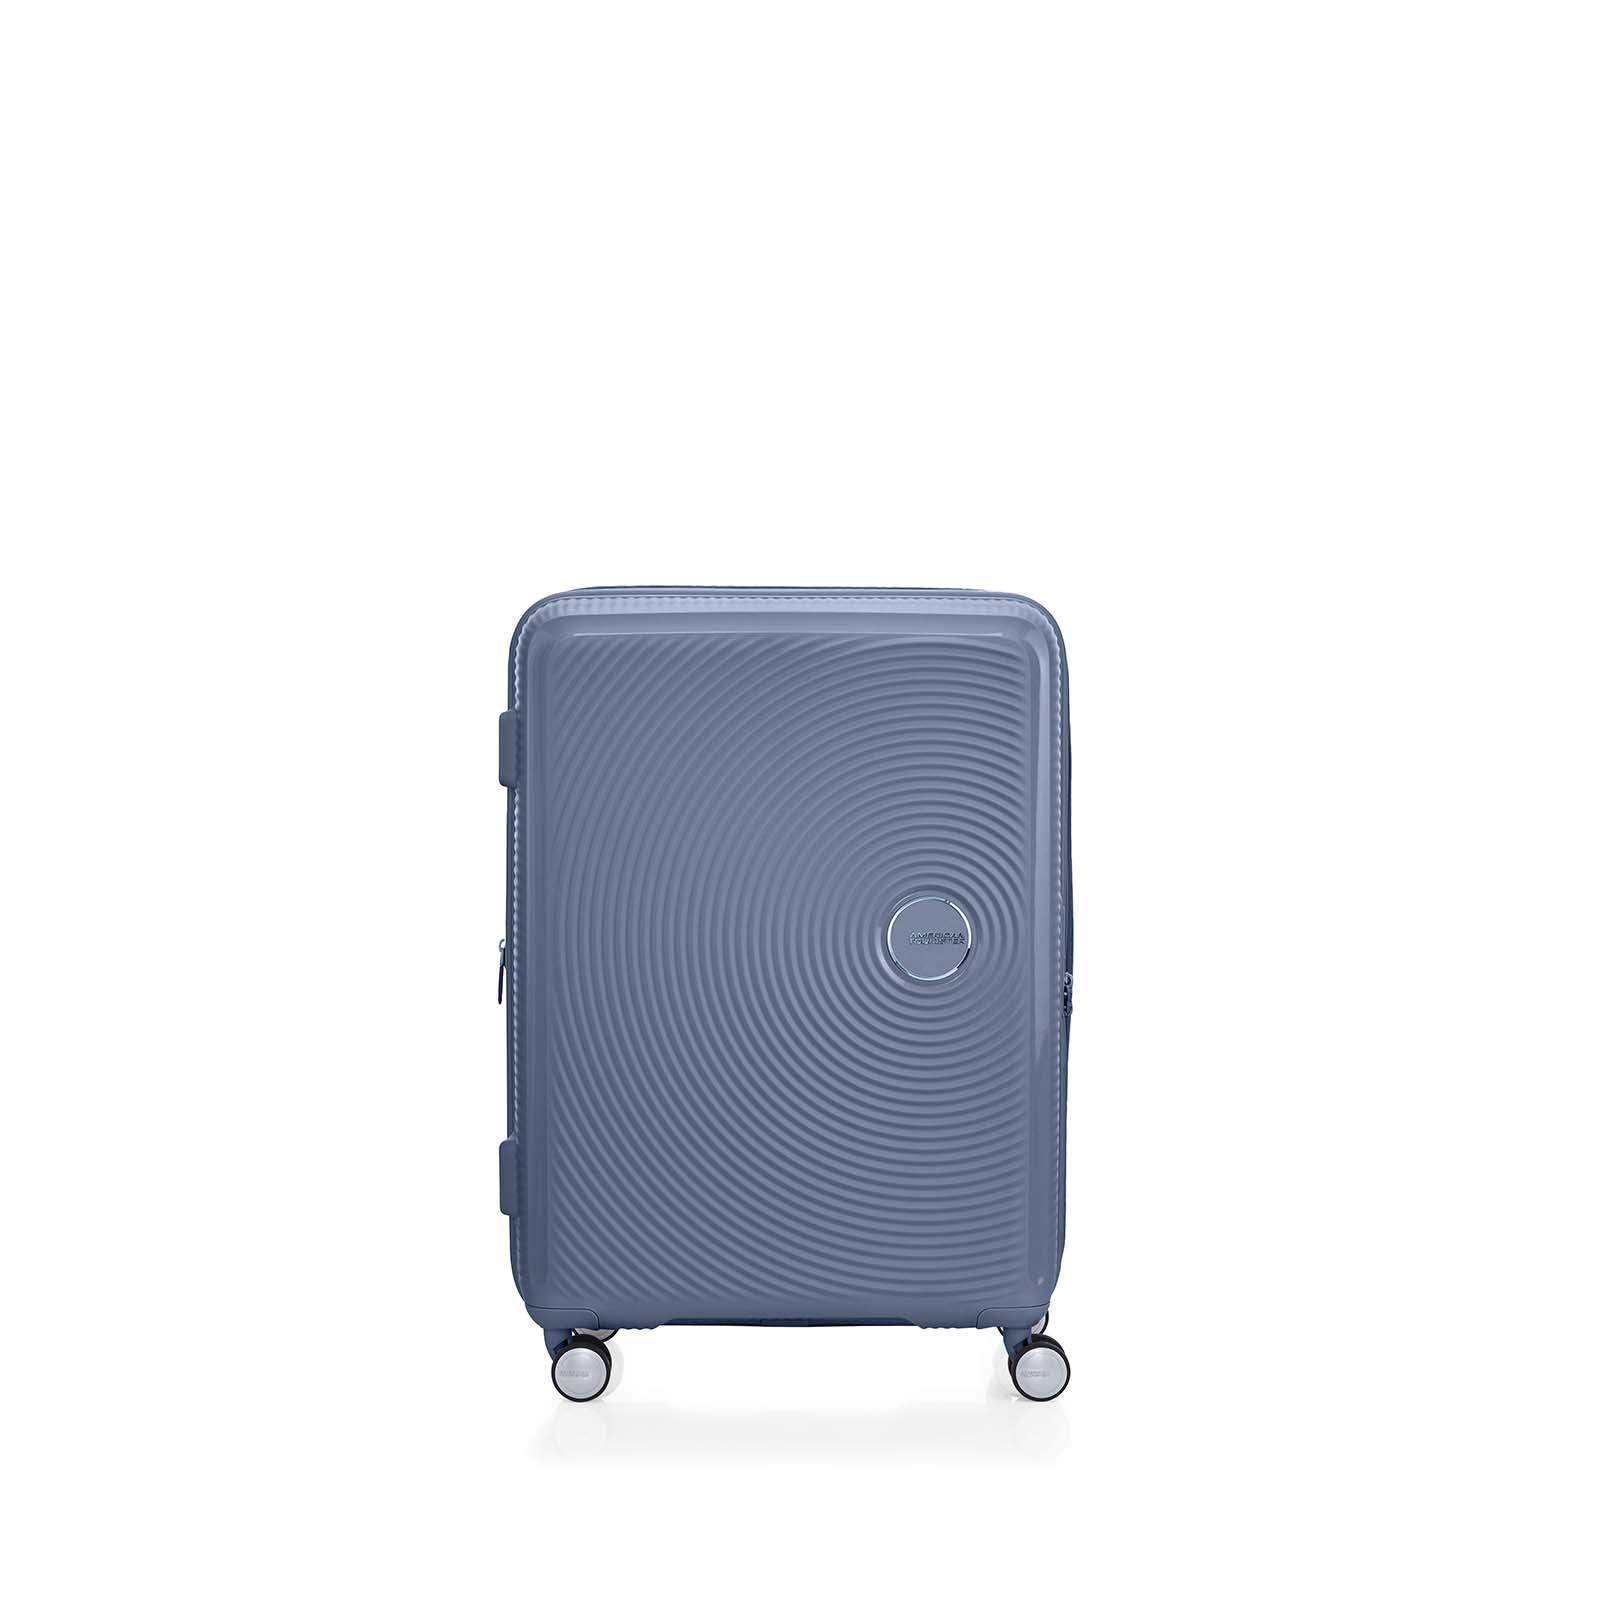 American-Tourister-Curio-2-69cm-Suitcase-Stone-Blue-Front